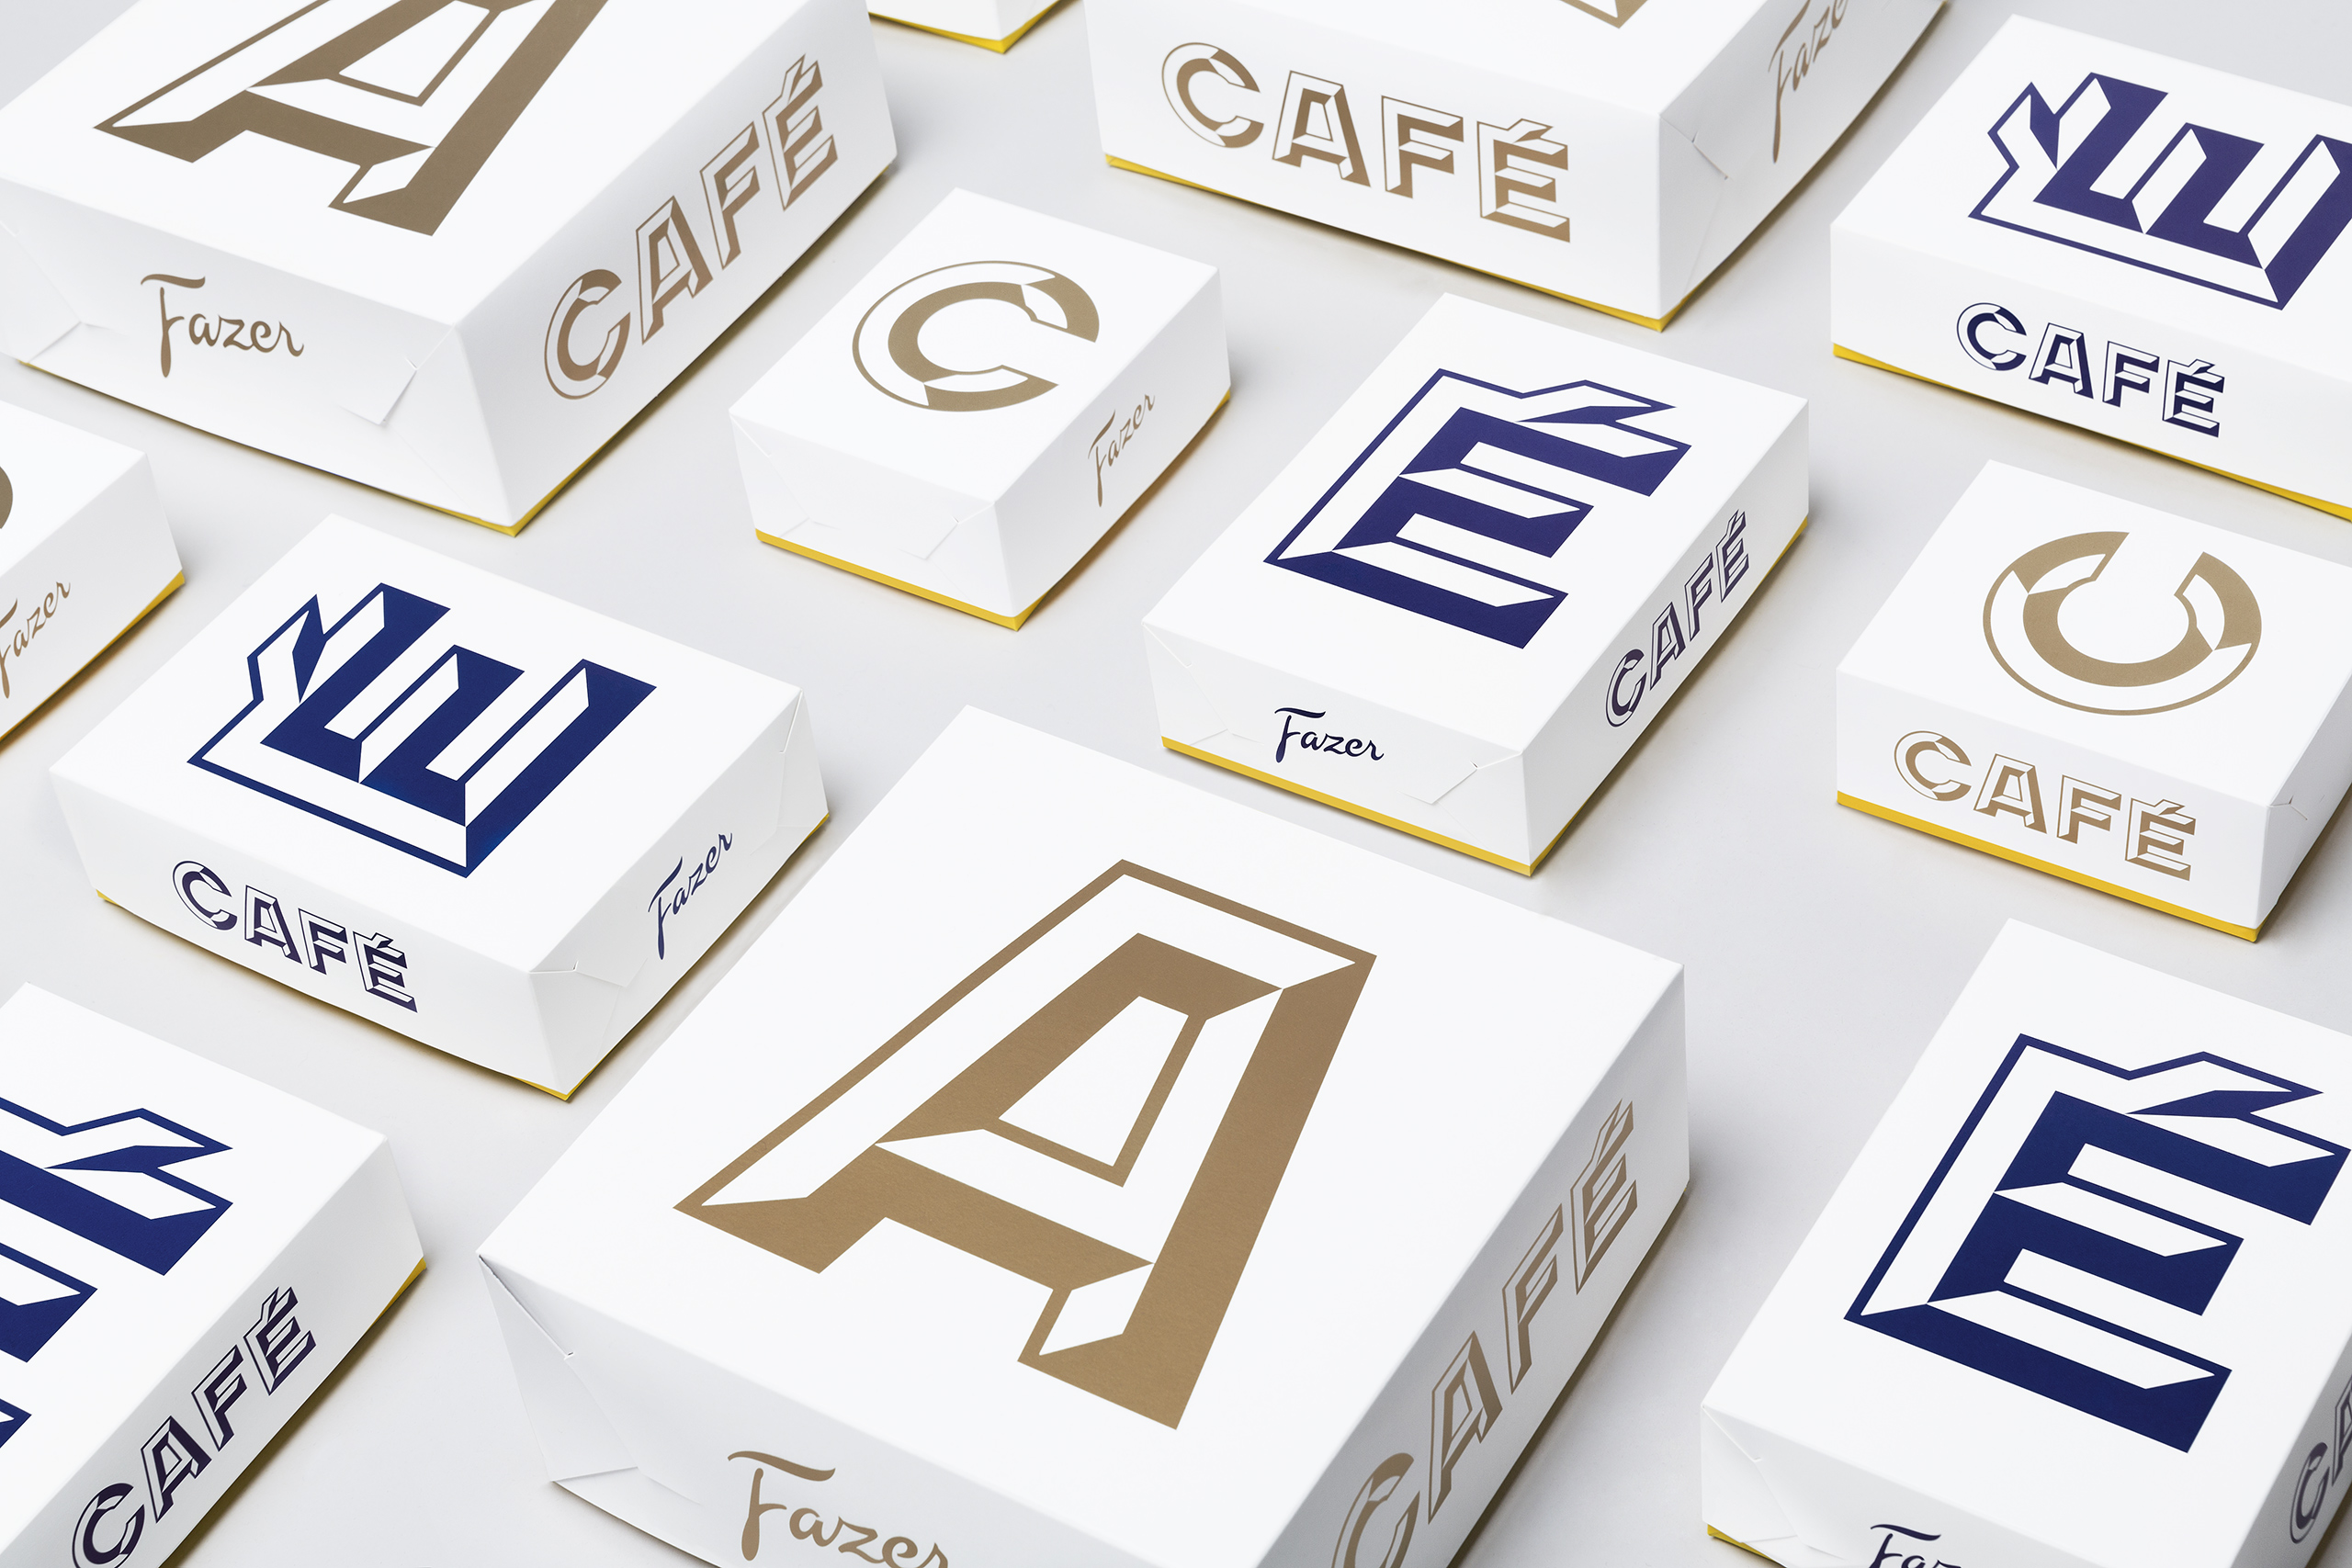 Fazer Cafe logo, branding and packaging designed by Kokoro & Moi